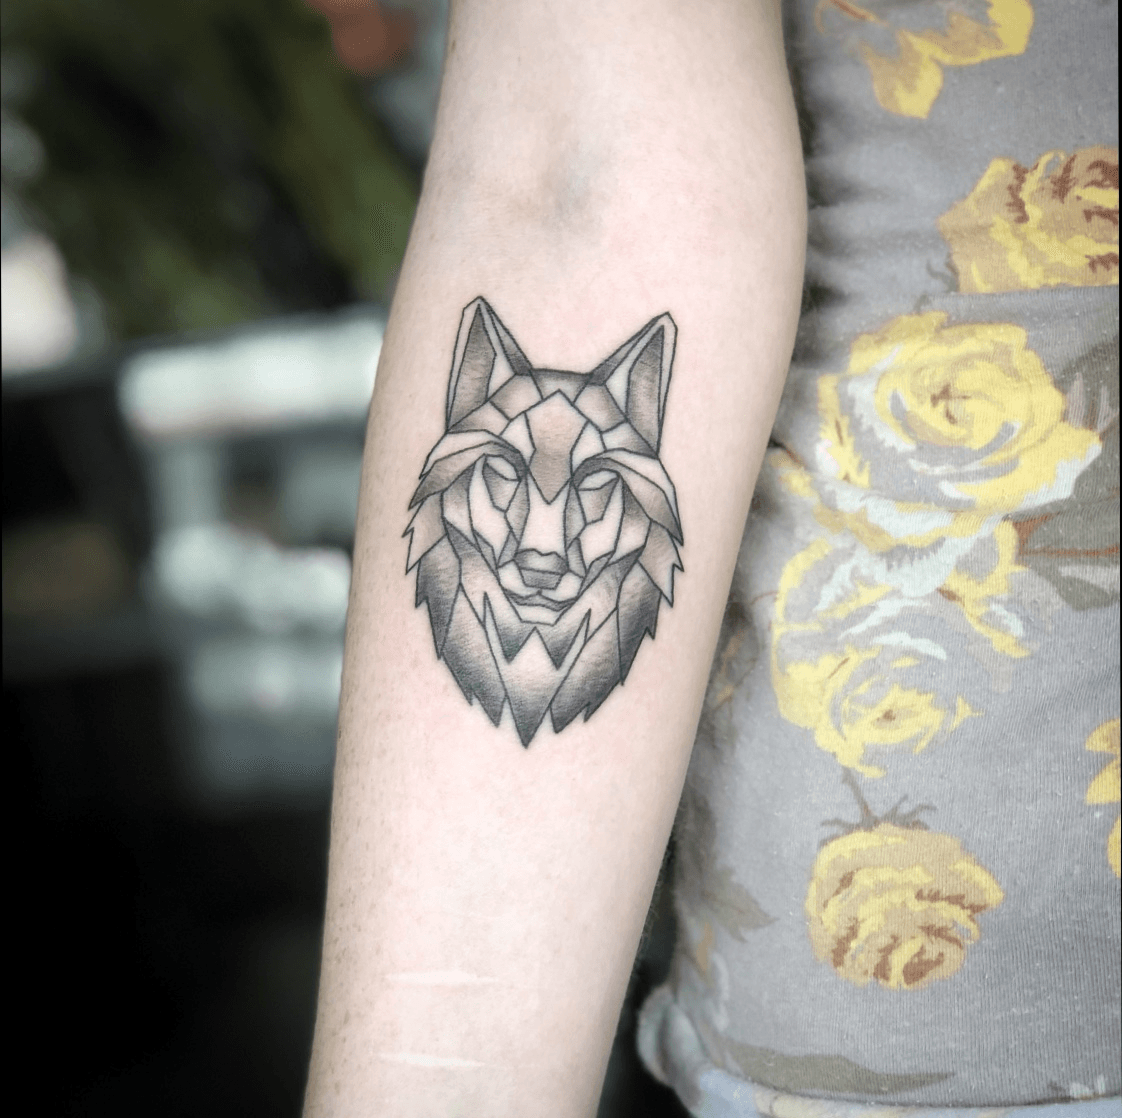 Tattoo uploaded by Brandon Fuller  geometric wolf tattoo creative  symmetry geometricwolf blackngrey blackngrey lagunabeach tattooartist  tattoos geometric wolftattoo wolf  Tattoodo